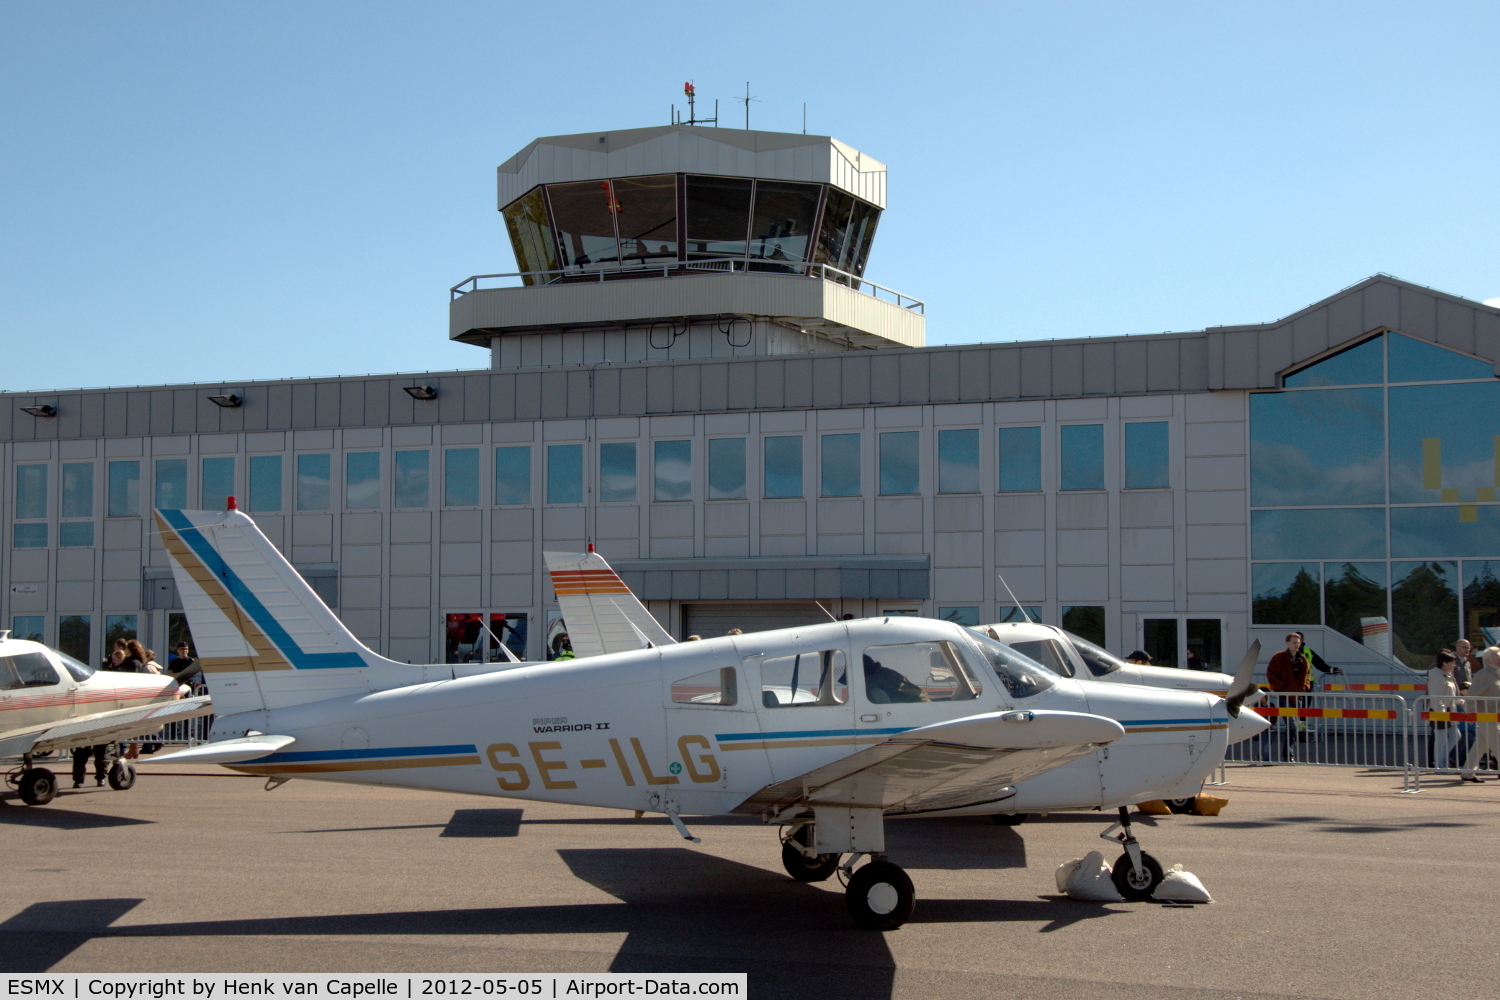 Växjö Airport (Kronoberg Airport), Växjö Sweden (ESMX) - Piper Warriors parked in front of the terminal building of Småland Airport.